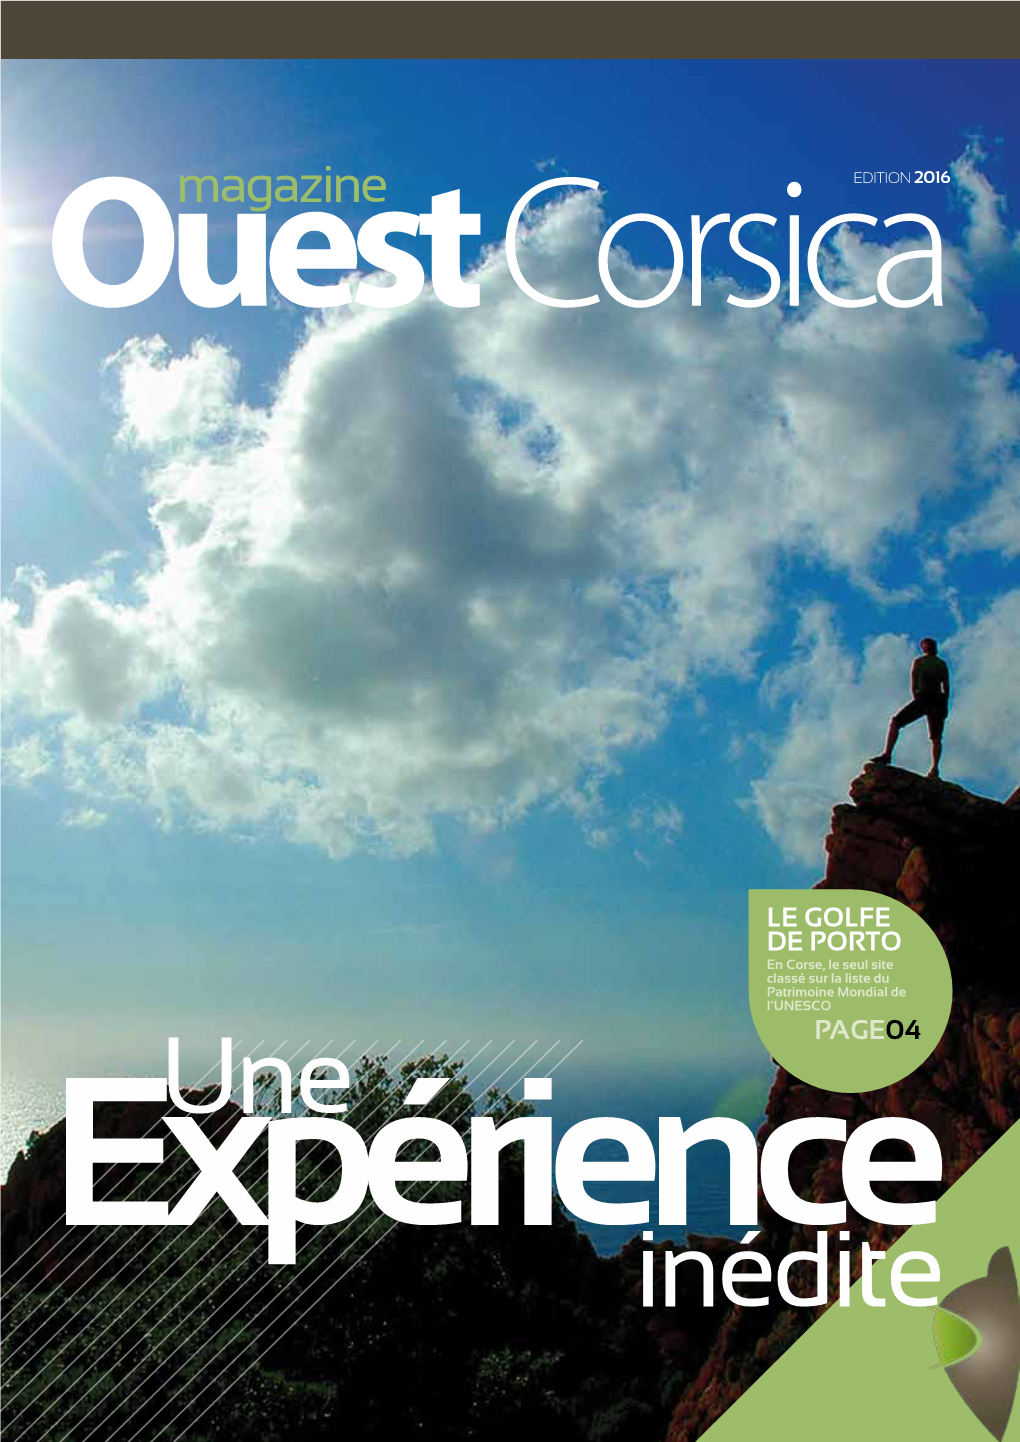 Edition 2016 2 Ouest Corsica Magazine